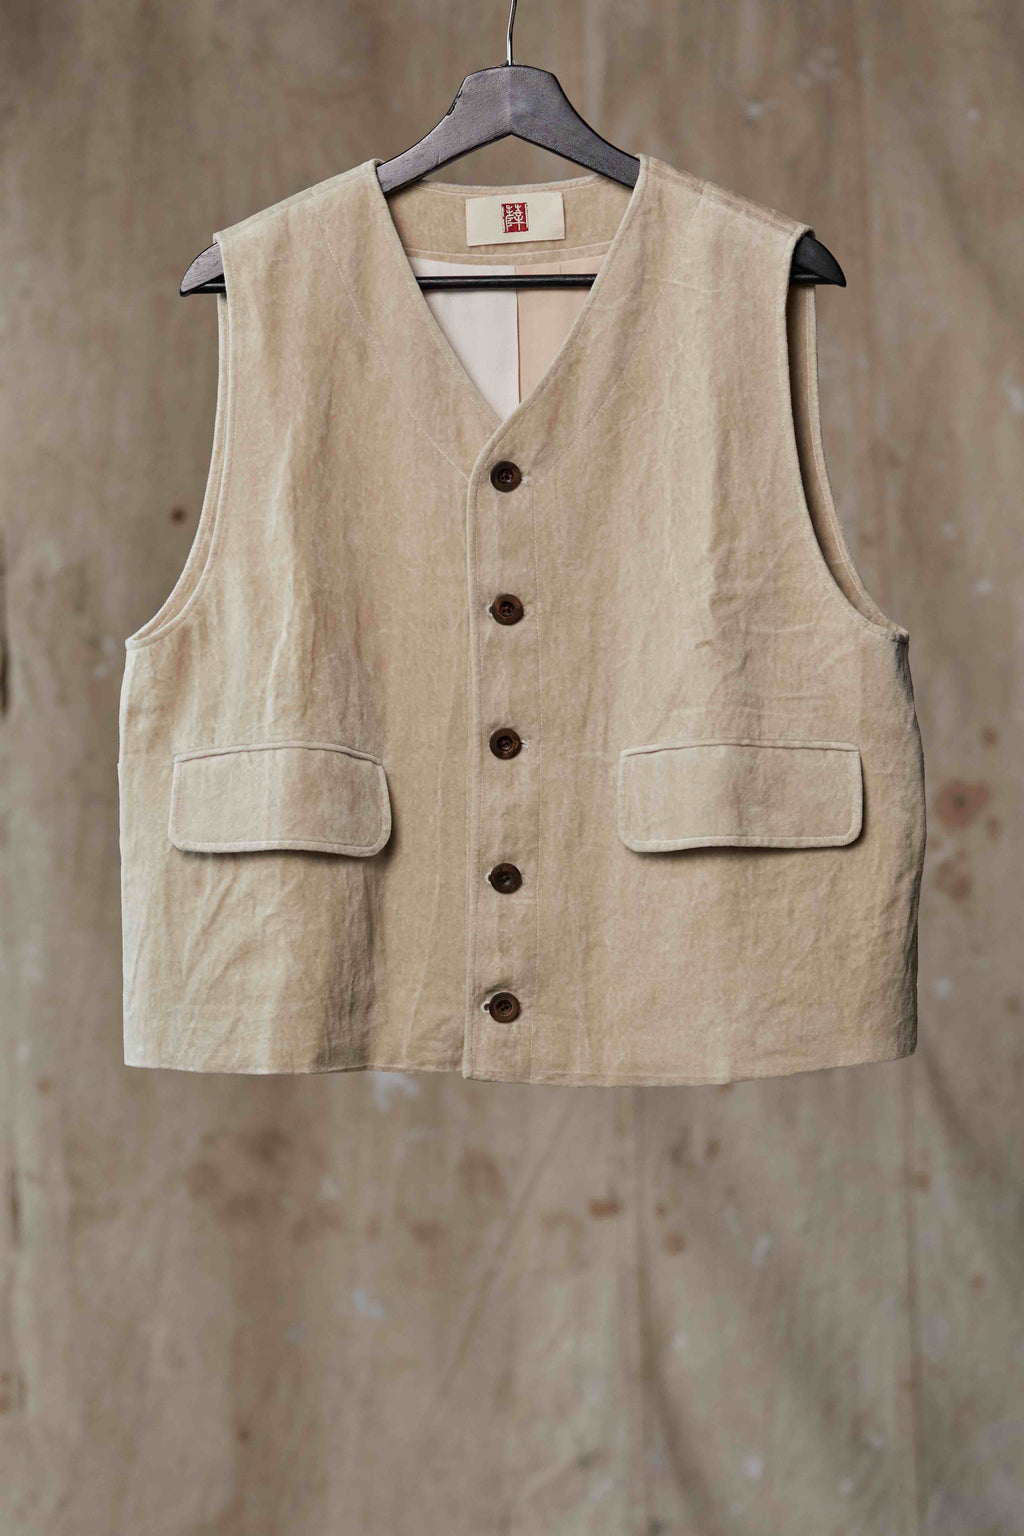 AVIVA JIFEI XUE Single Breasted Flap Pocket Vest w/Adjustable Back